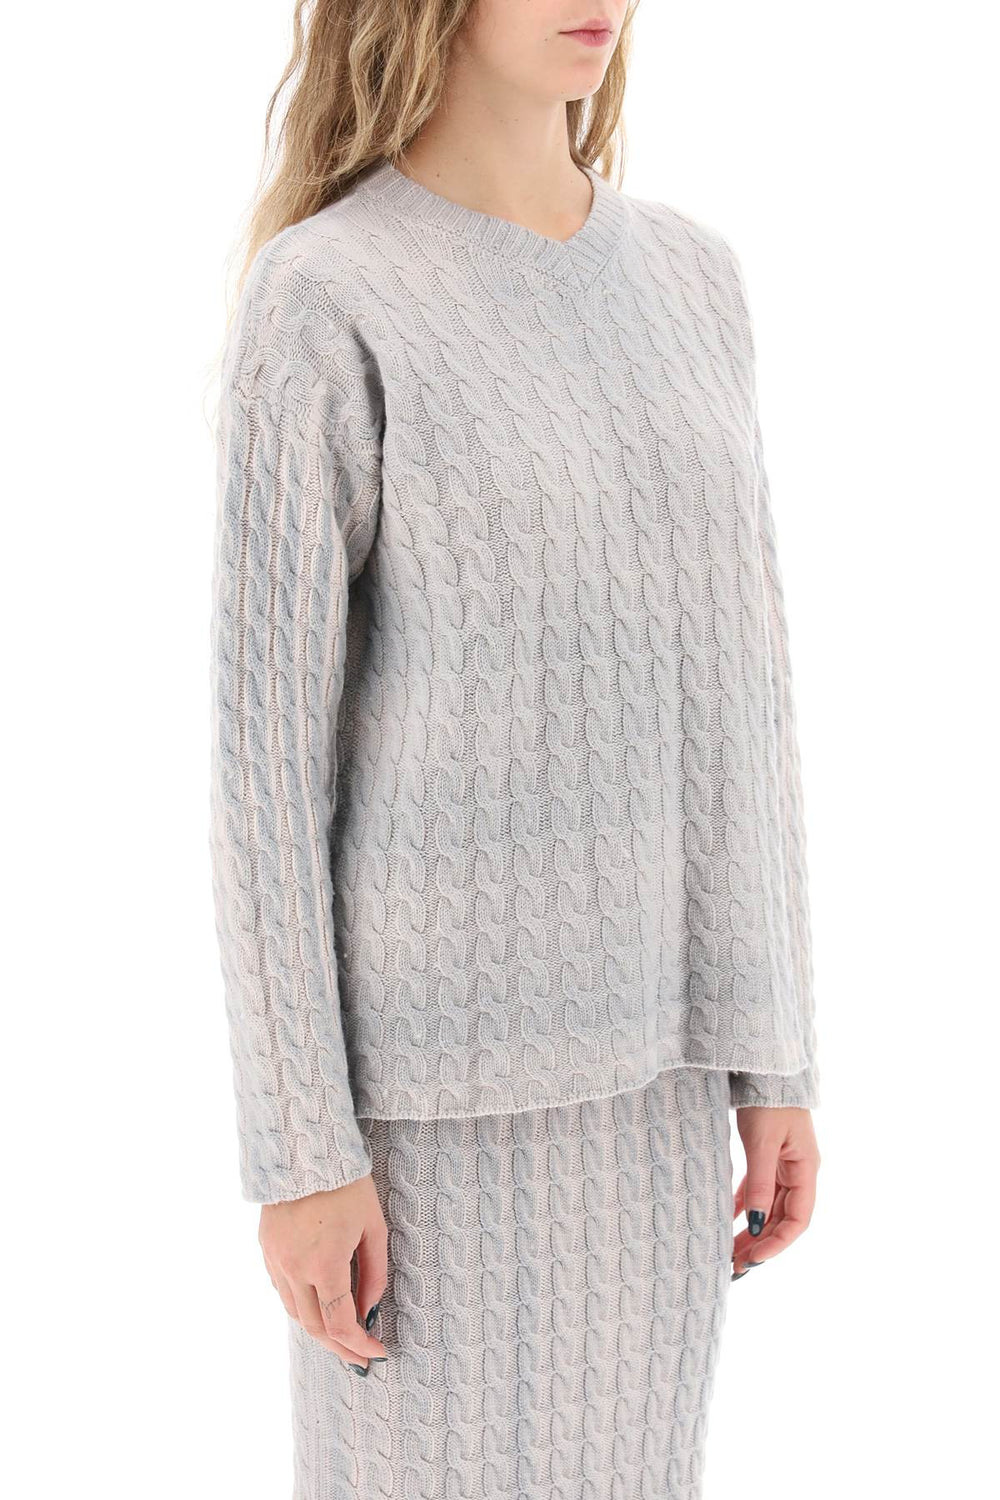 Paloma wool ainhoa cable knit sweater-1